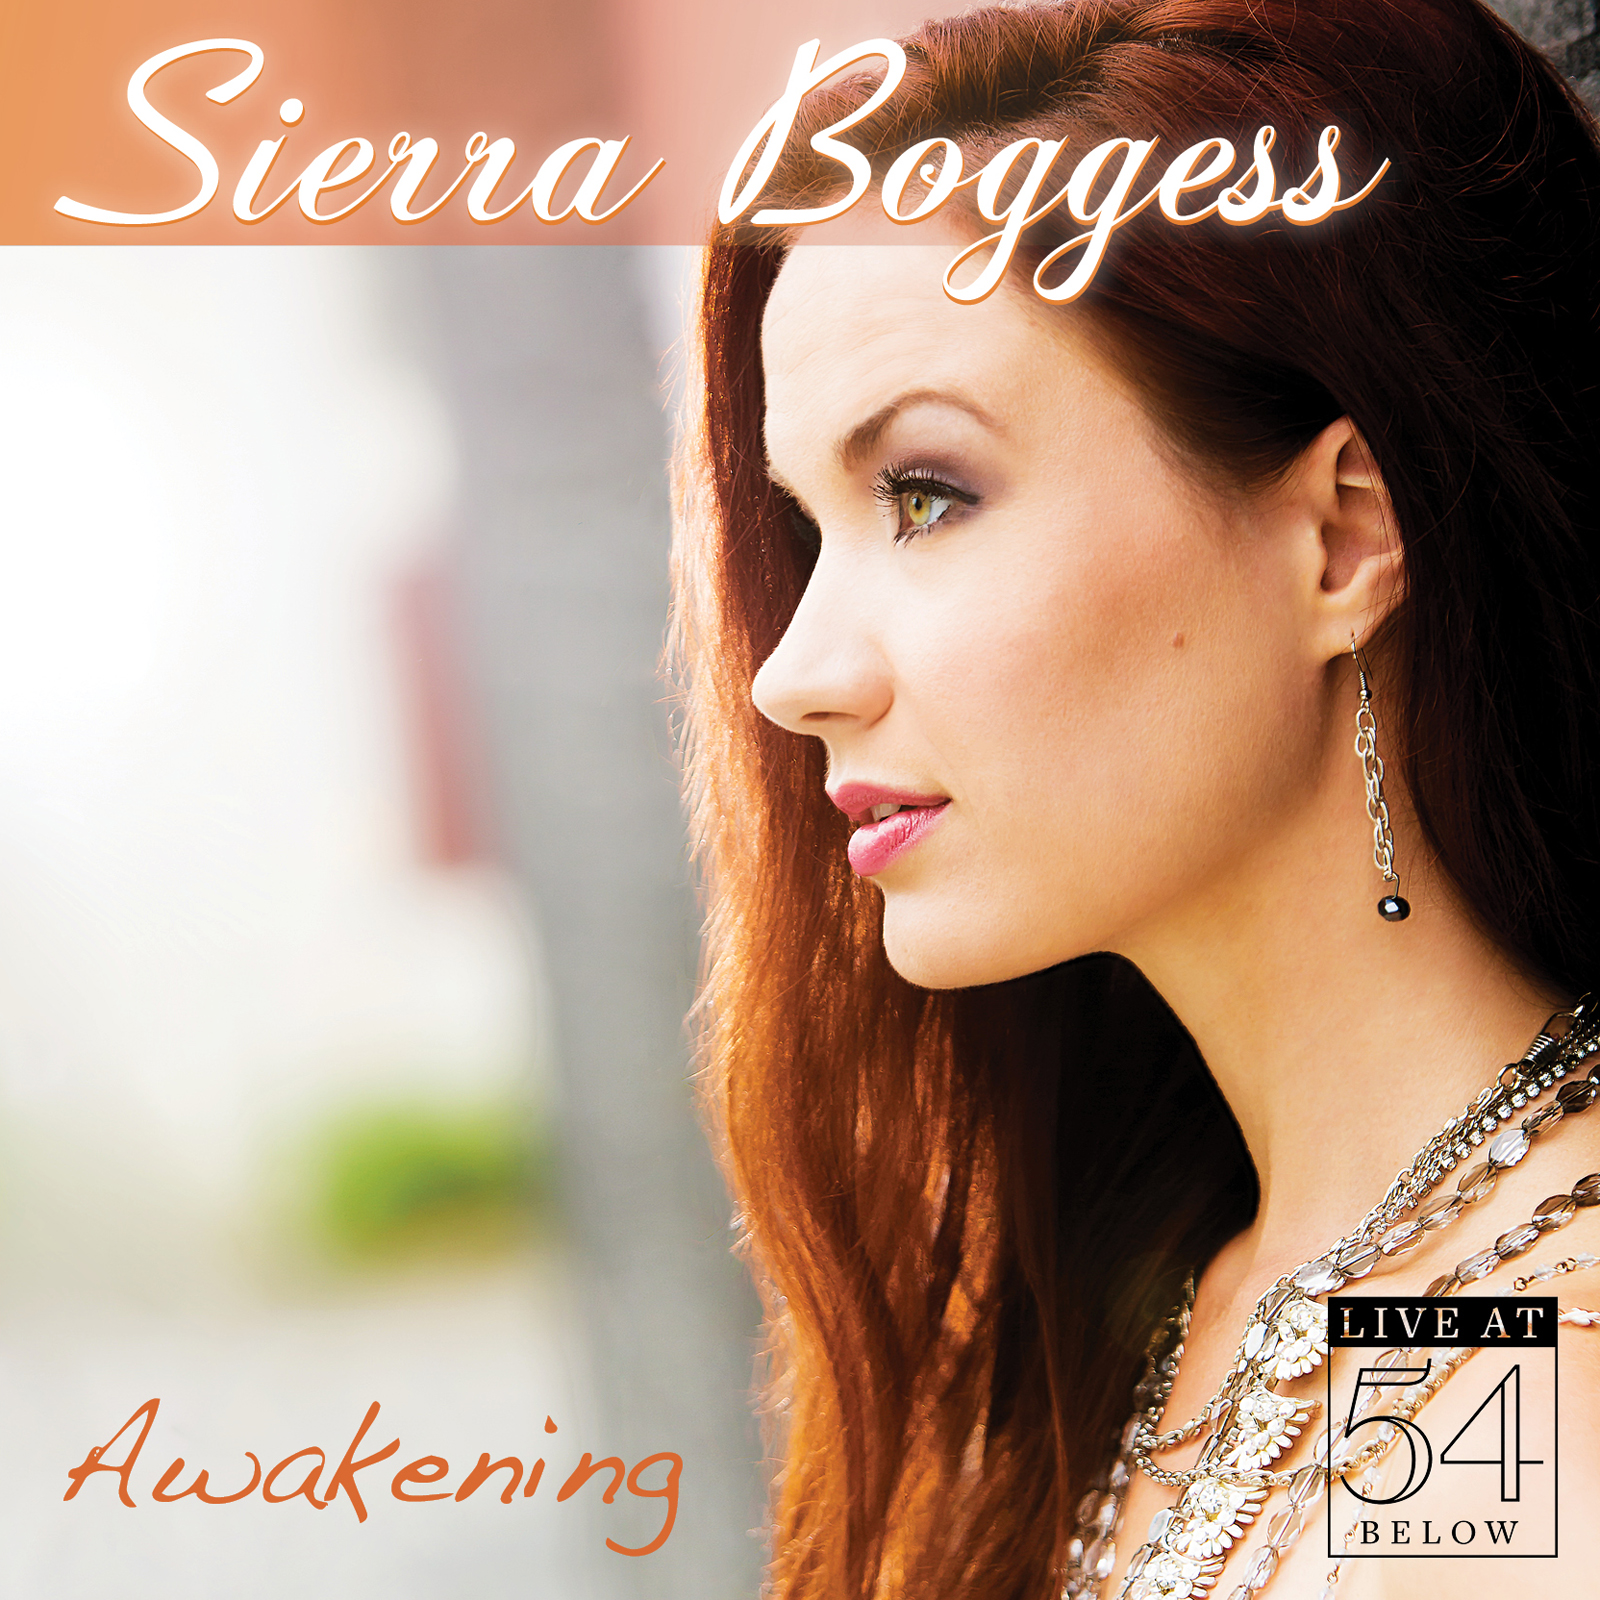 Awakening: Live at 54 BELOW - Sierra Boggess Album